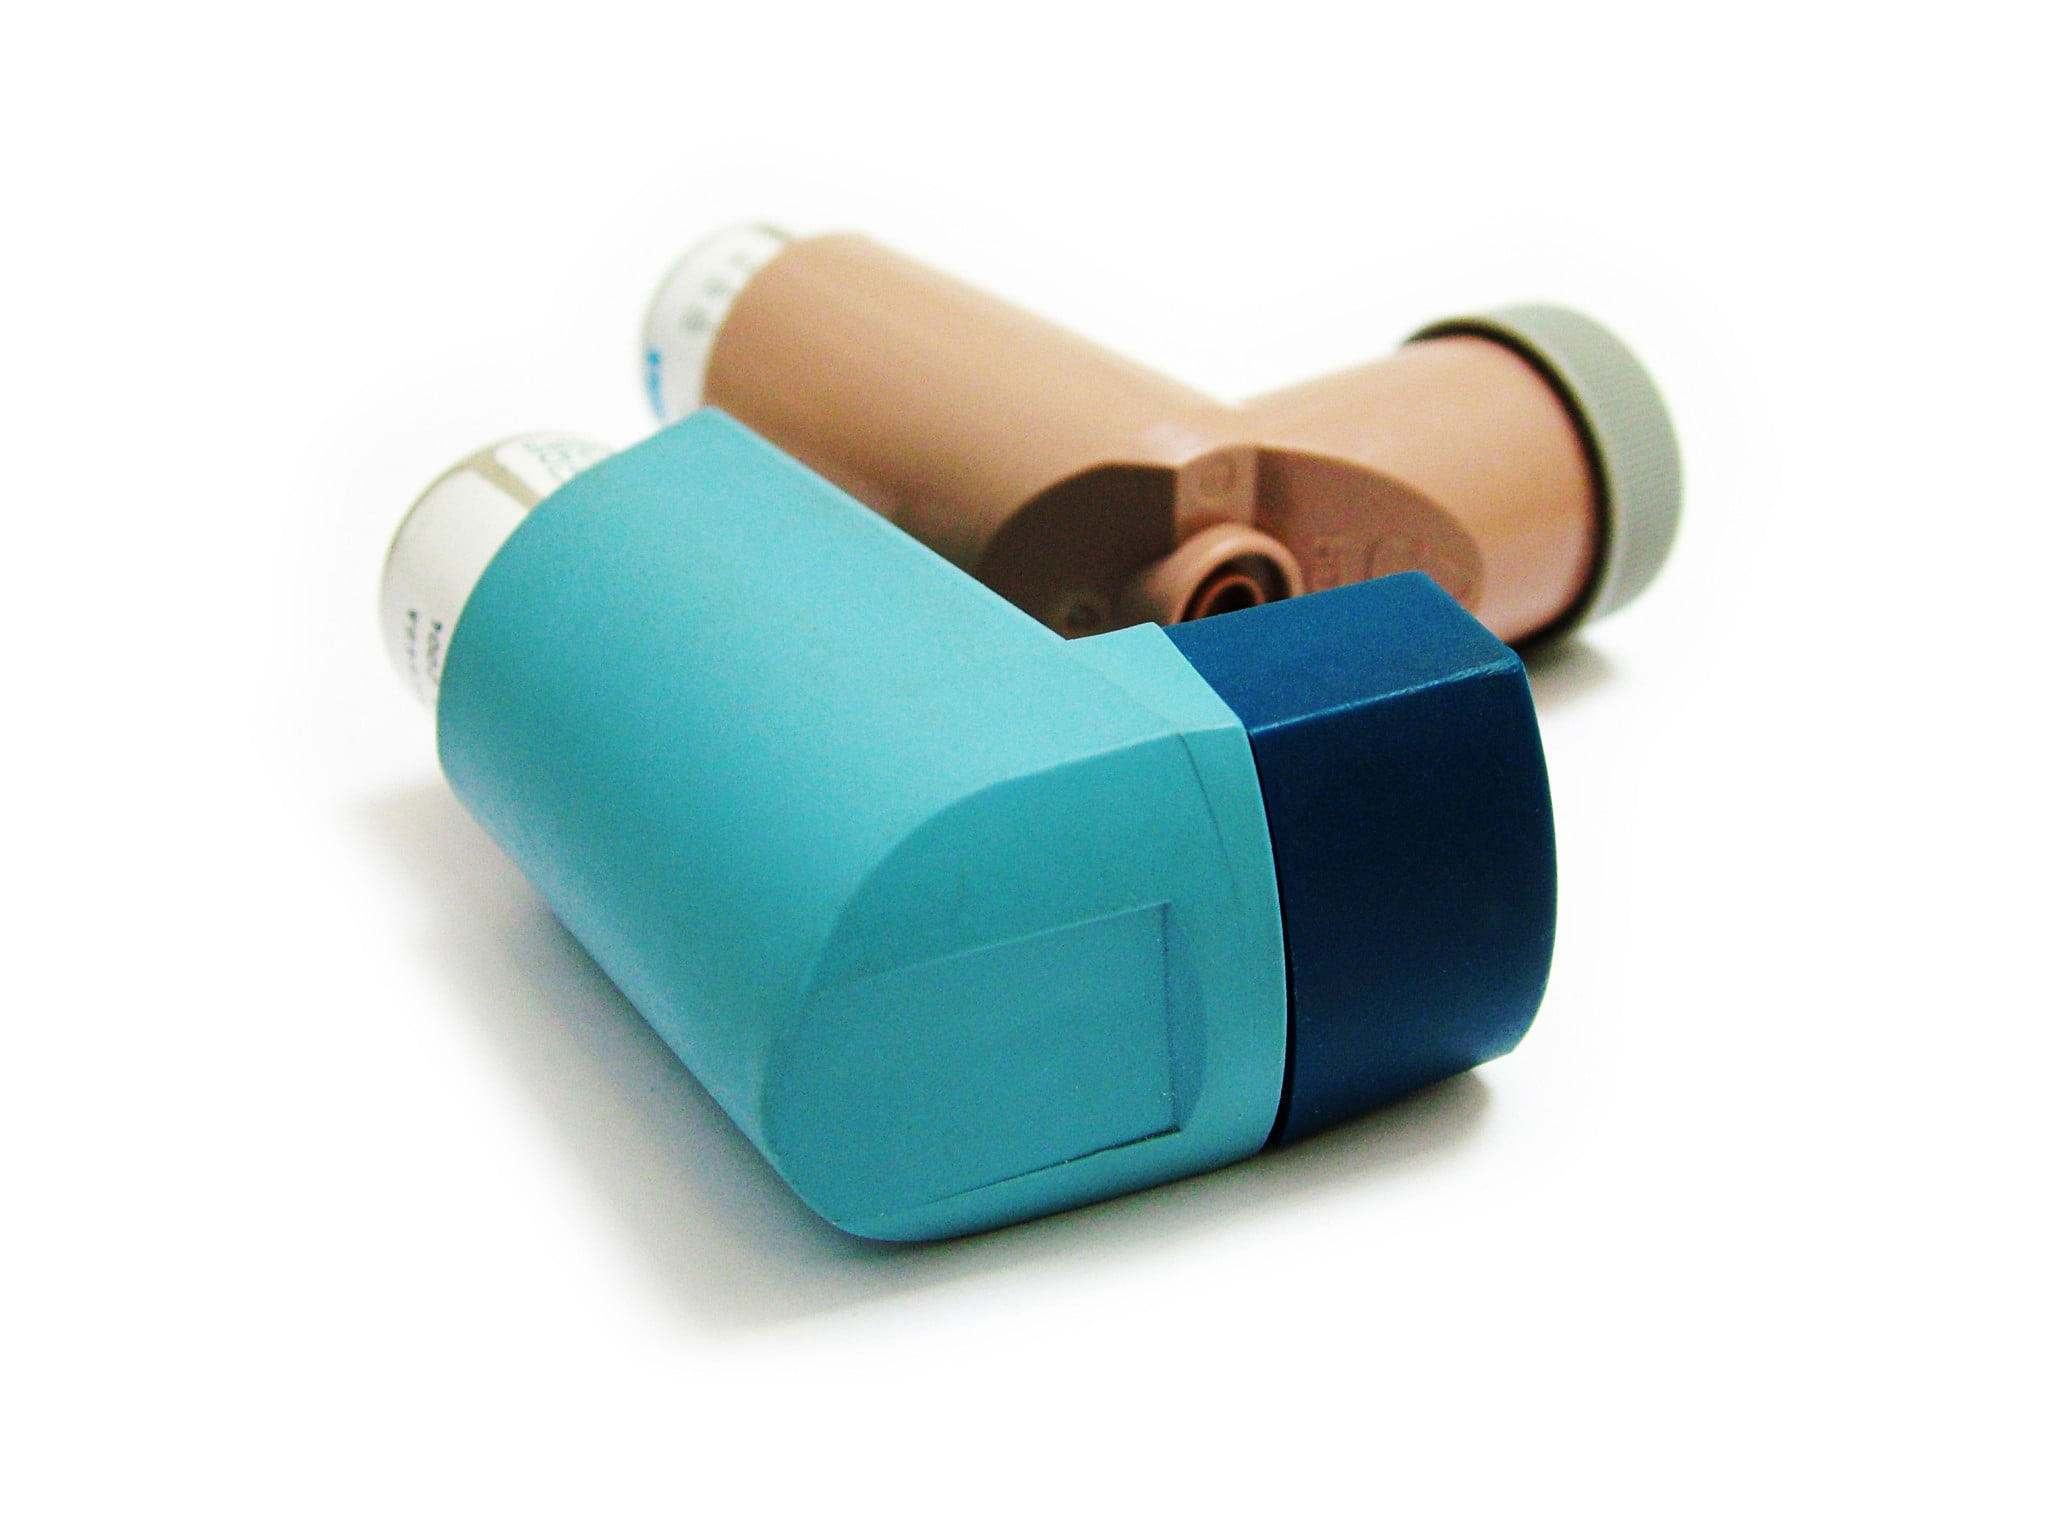 asthma puffers